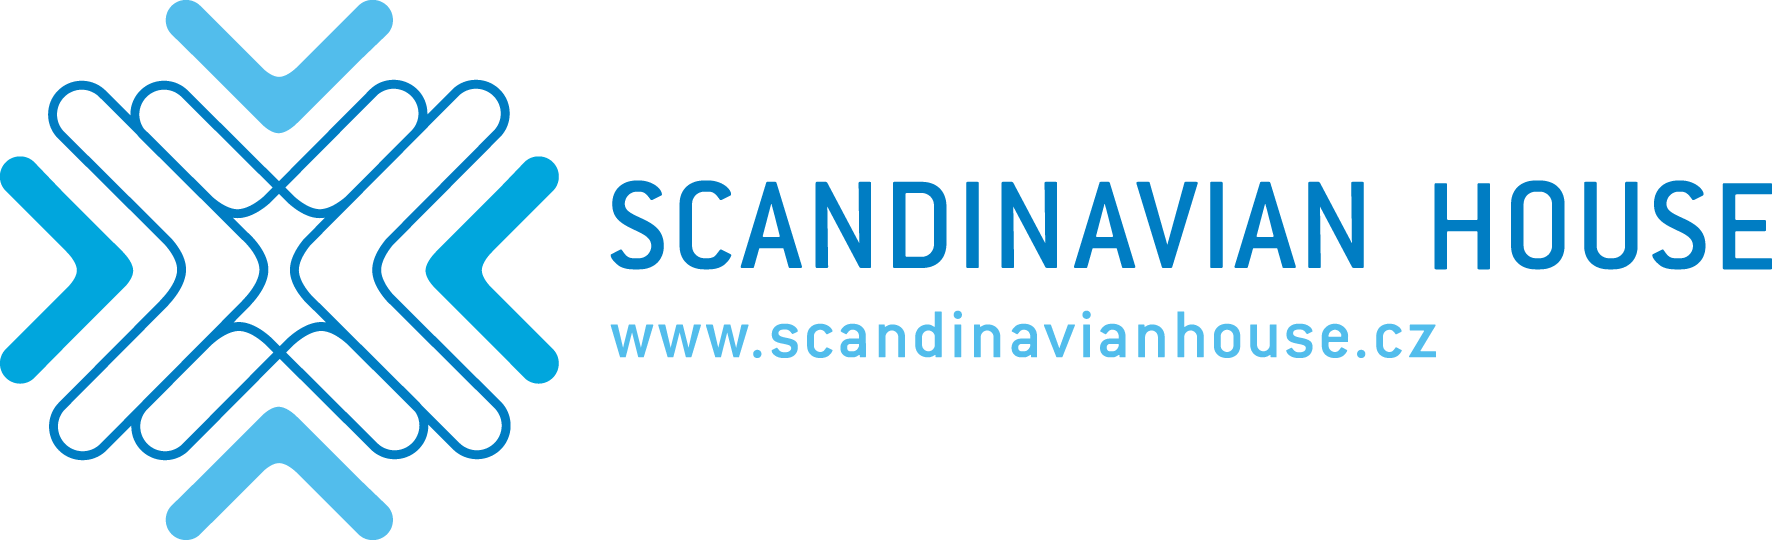 logo scandinavian house